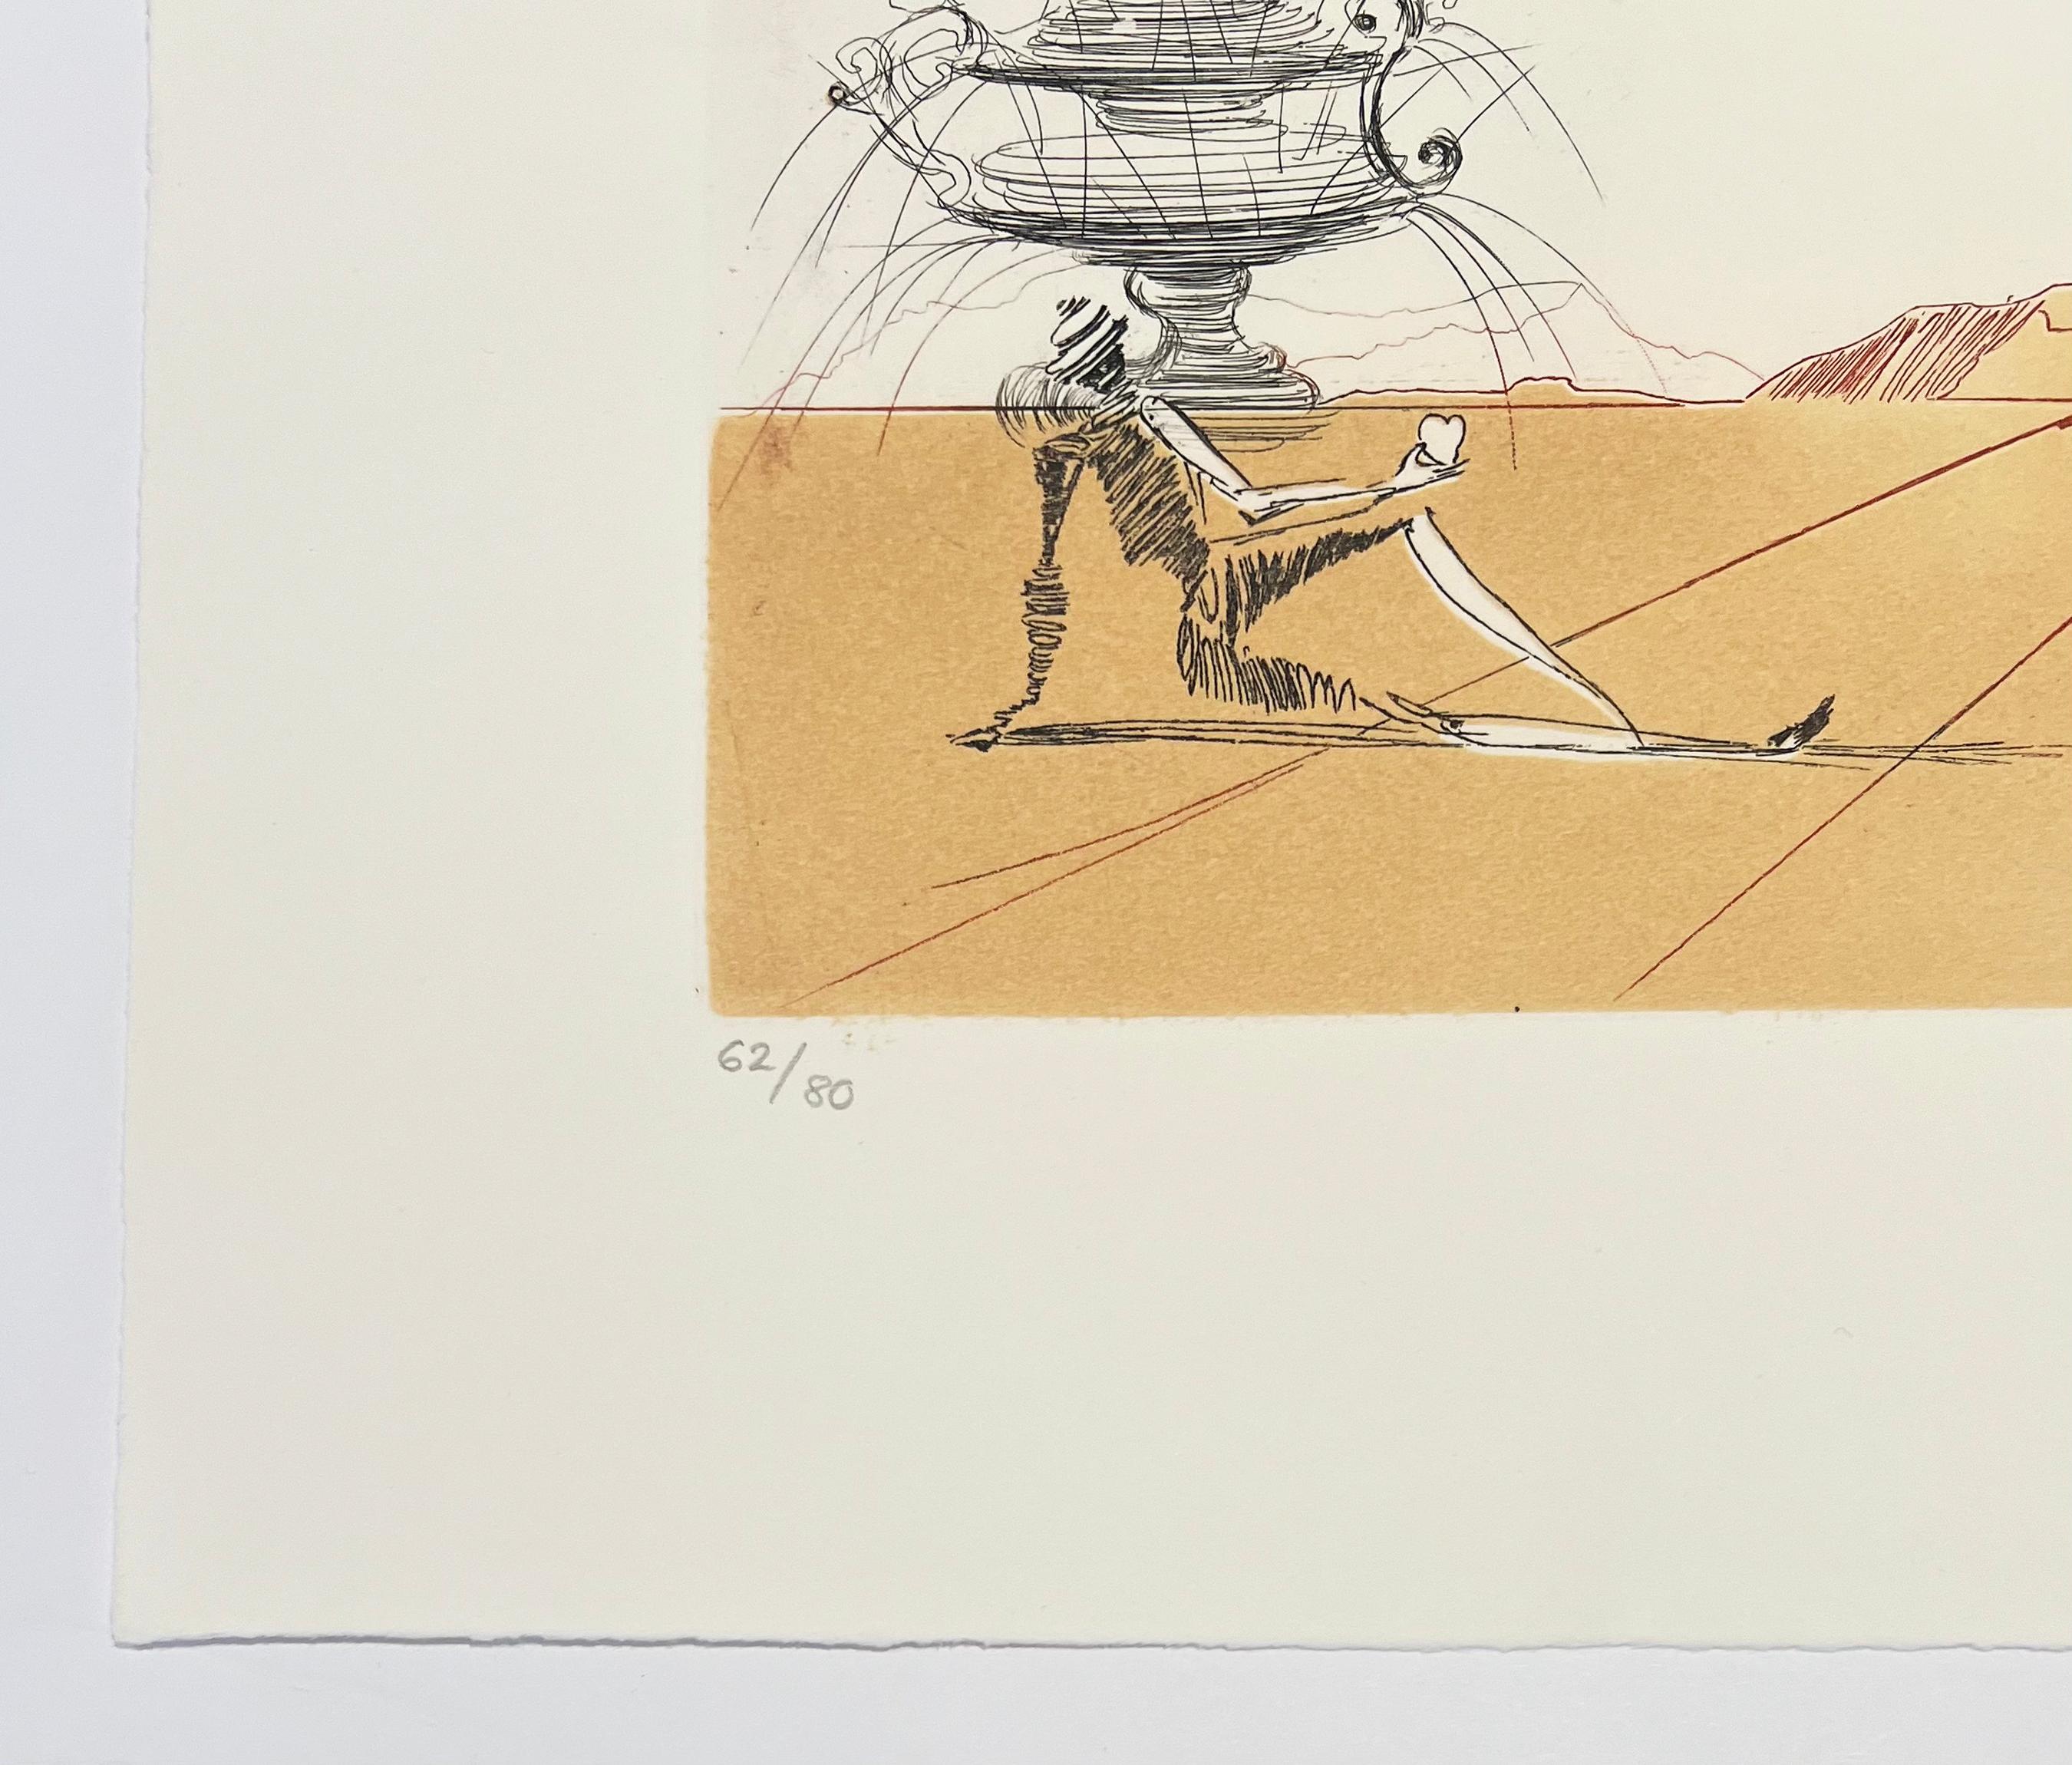 Artist: Salvador Dali
Title: Fantasmes de la plaine d'Ampurdam from begonia
Portfolio: Neuf Paysages
Medium: Etching
Year: 1980
Edition: 62/80
Sheet Size: 19 7/8